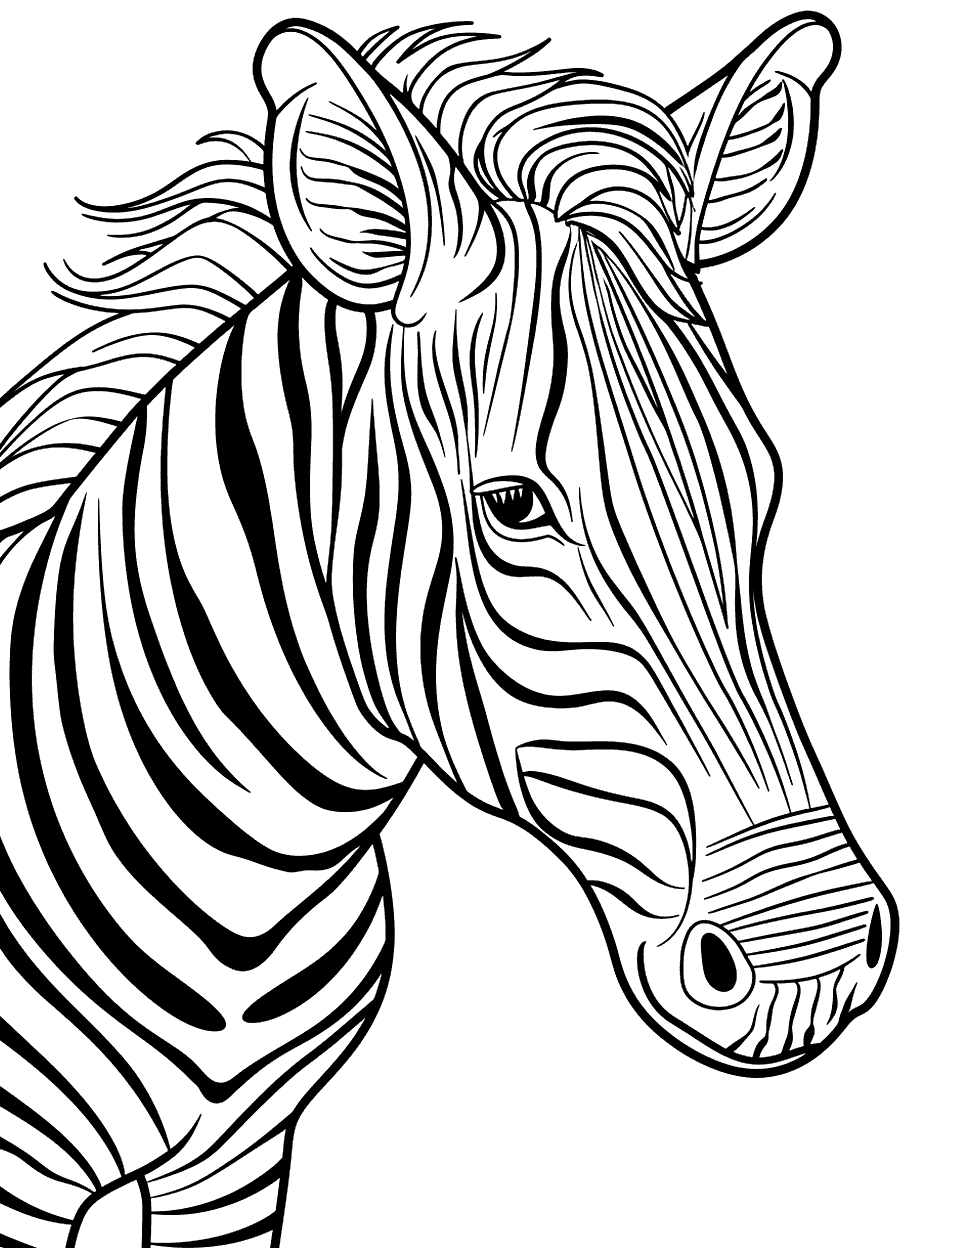 Zebra Close-Up Coloring Page - A close view of a zebra’s face, emphasizing its unique stripe pattern.